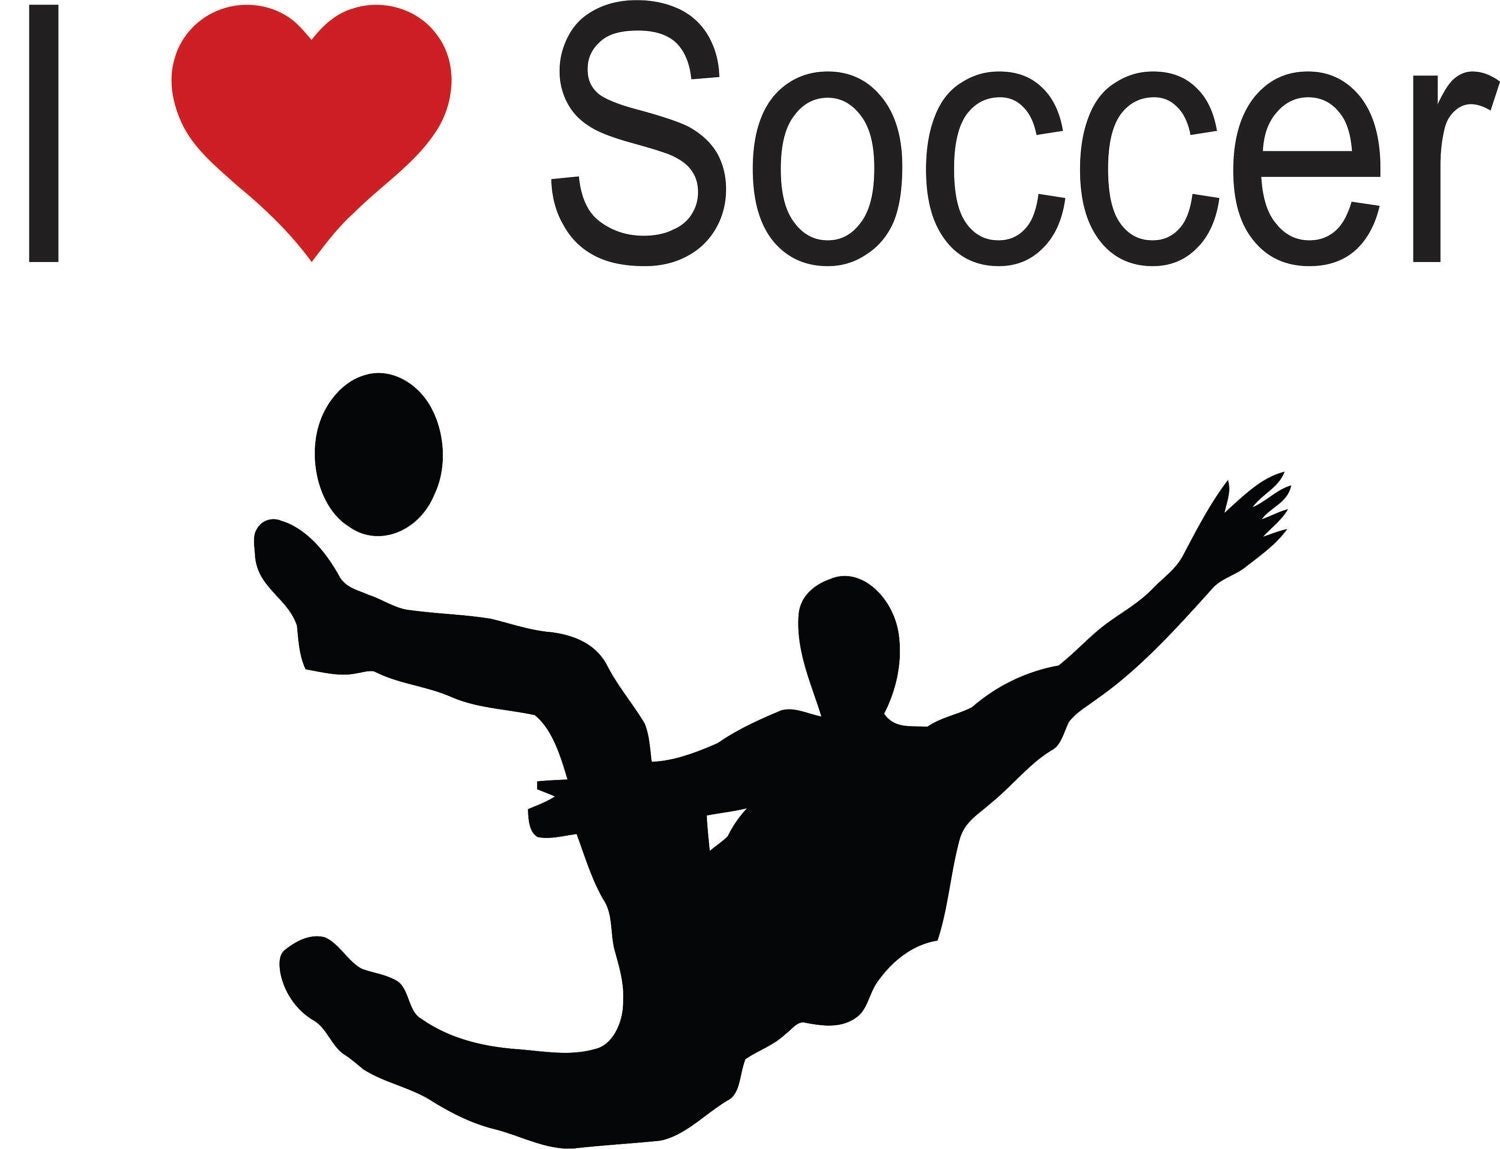 Image result for i love soccer'